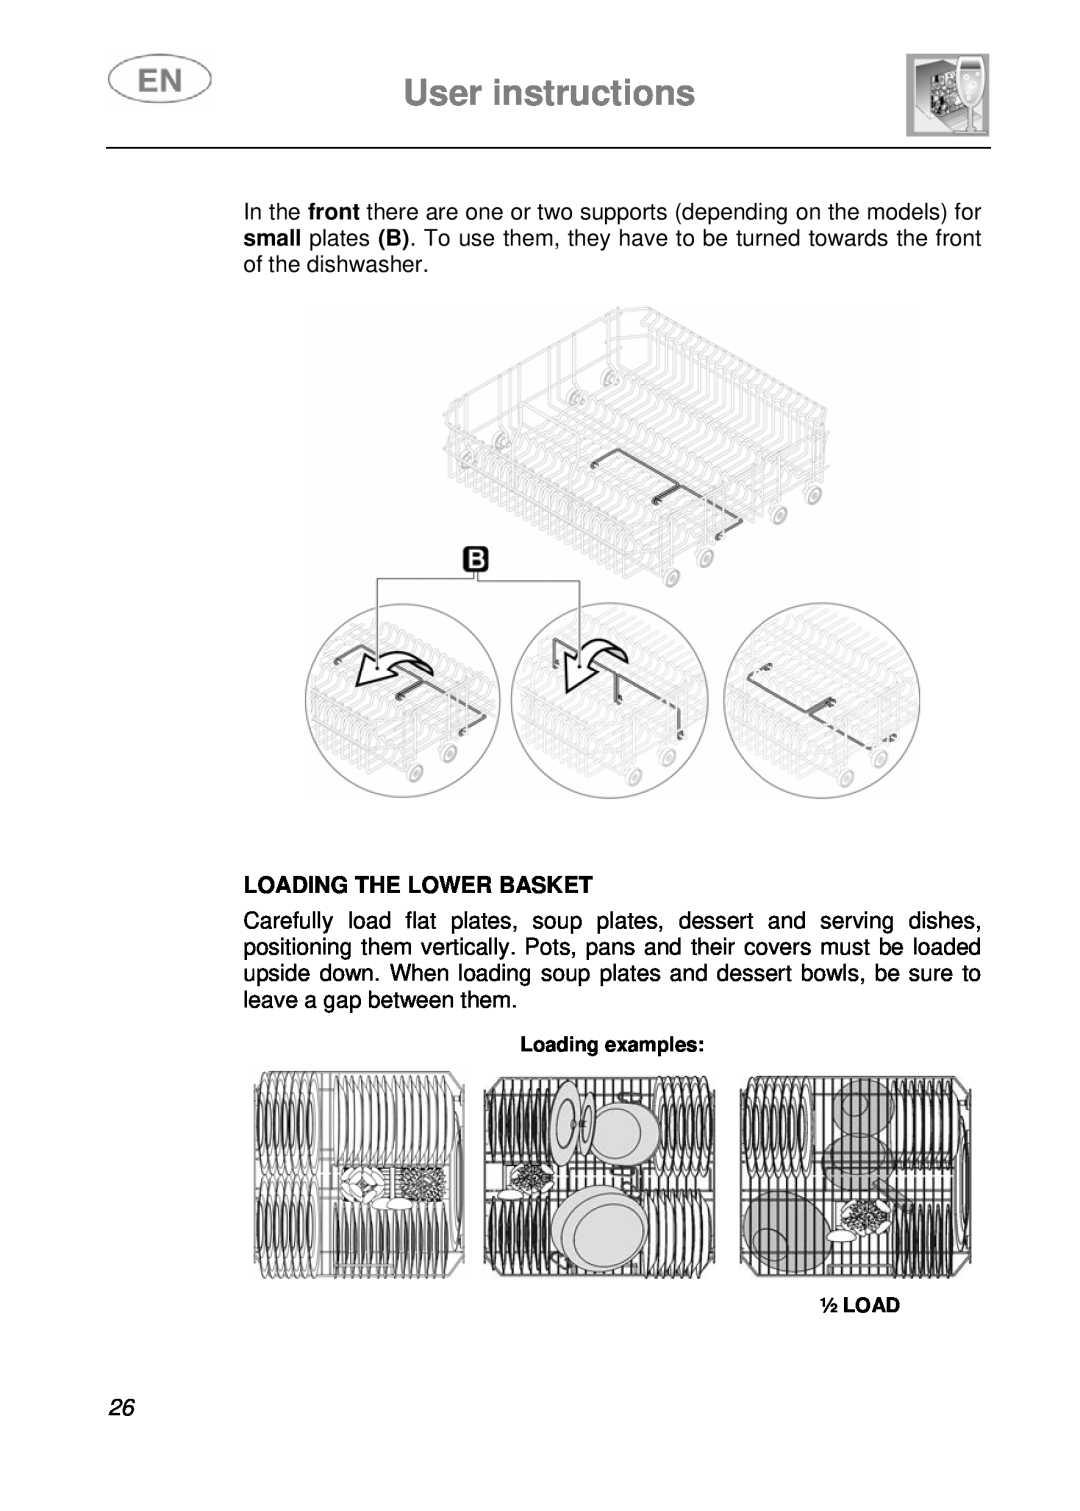 Smeg LVS1449B instruction manual User instructions, Loading The Lower Basket, Loading examples ½ LOAD 